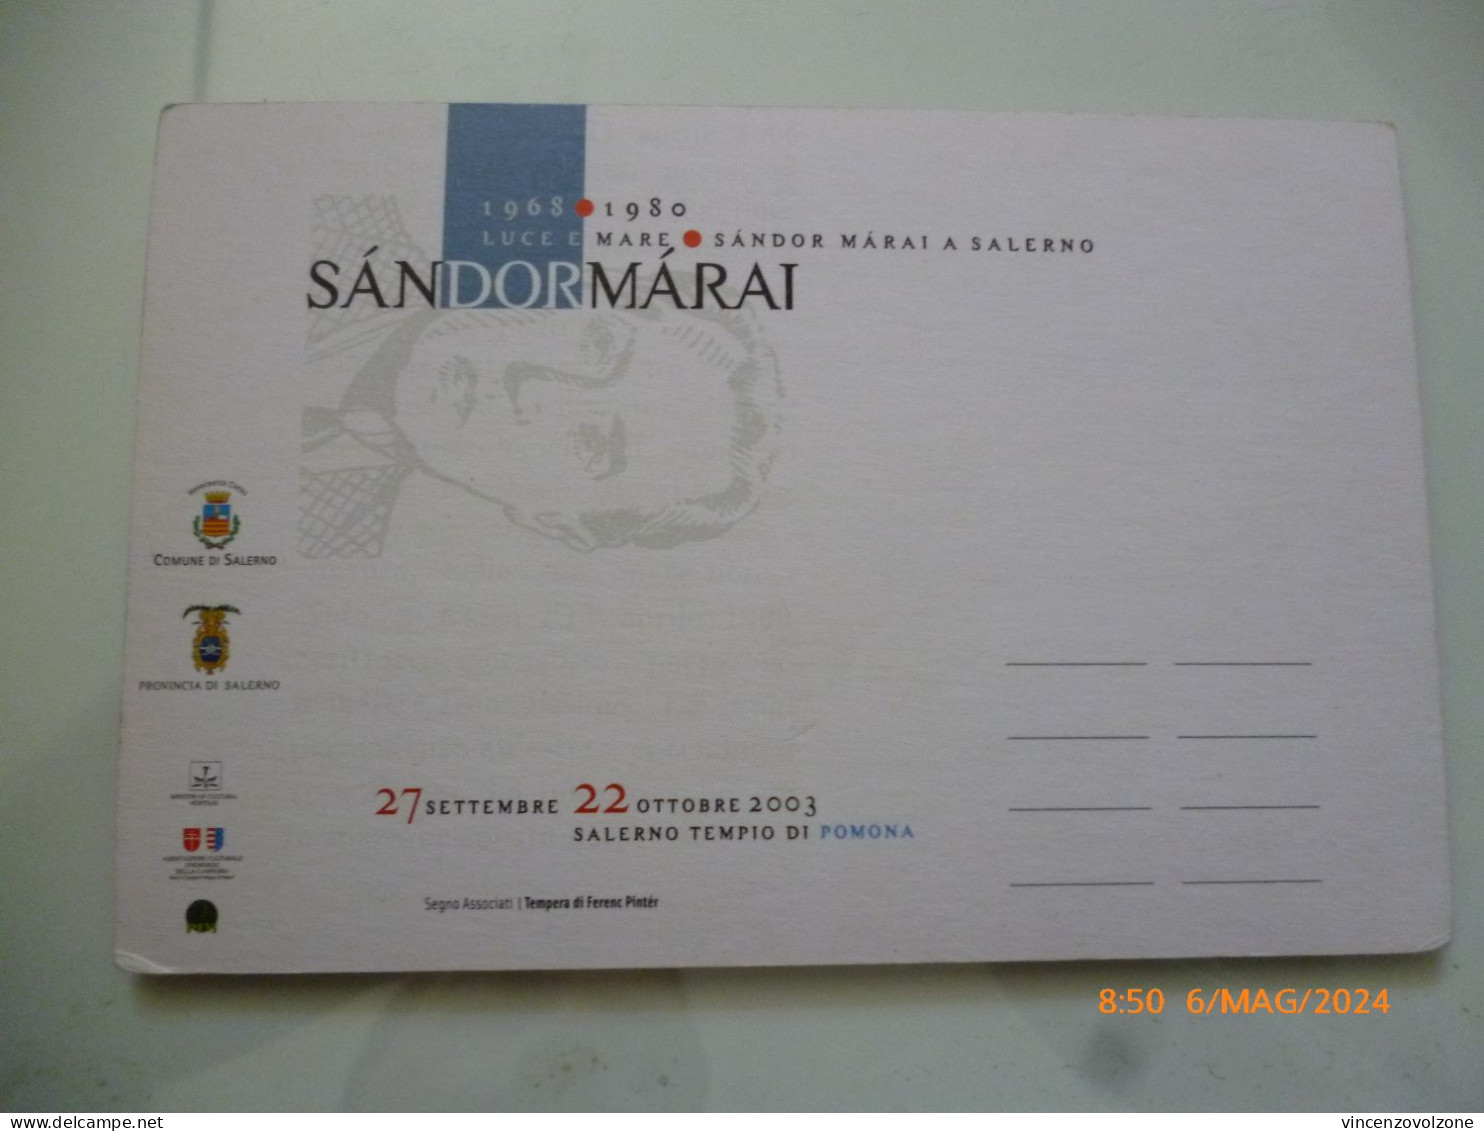 Cartolina "1968 - 1980 SANDORMARAI A SALERNO 2003" - Ausstellungen